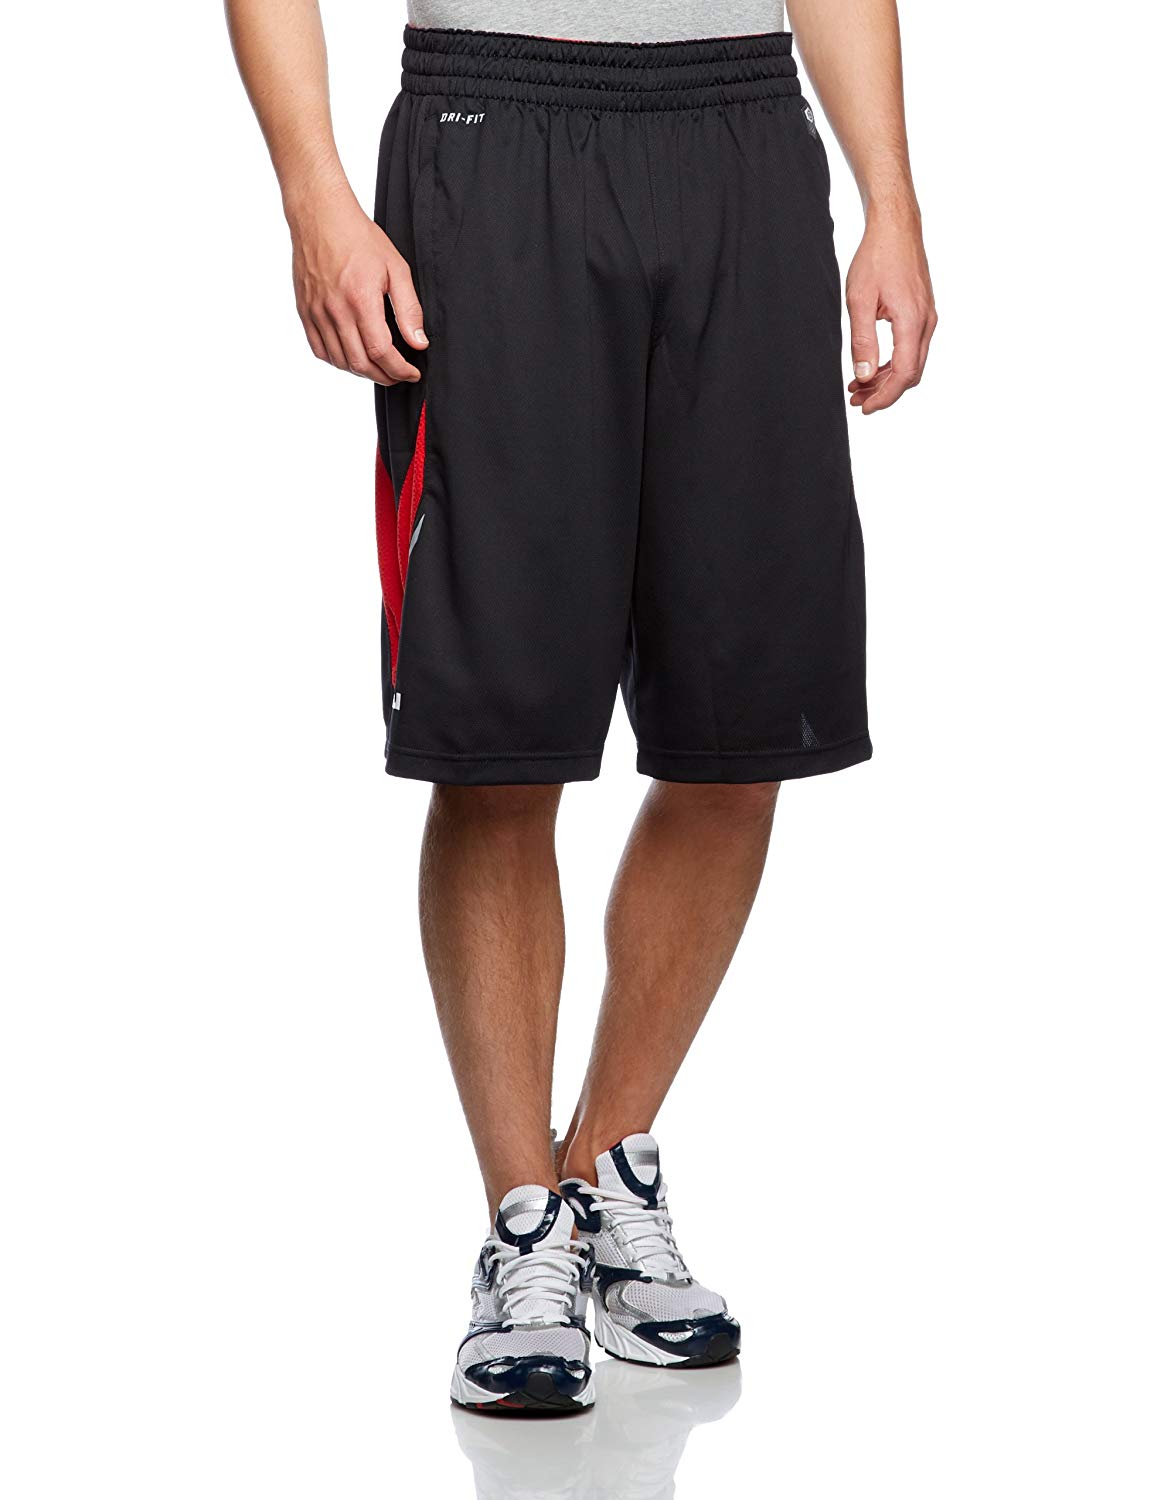 Nike Mens Lebron Outdoor Tech Basketball Shorts - image 1 of 2